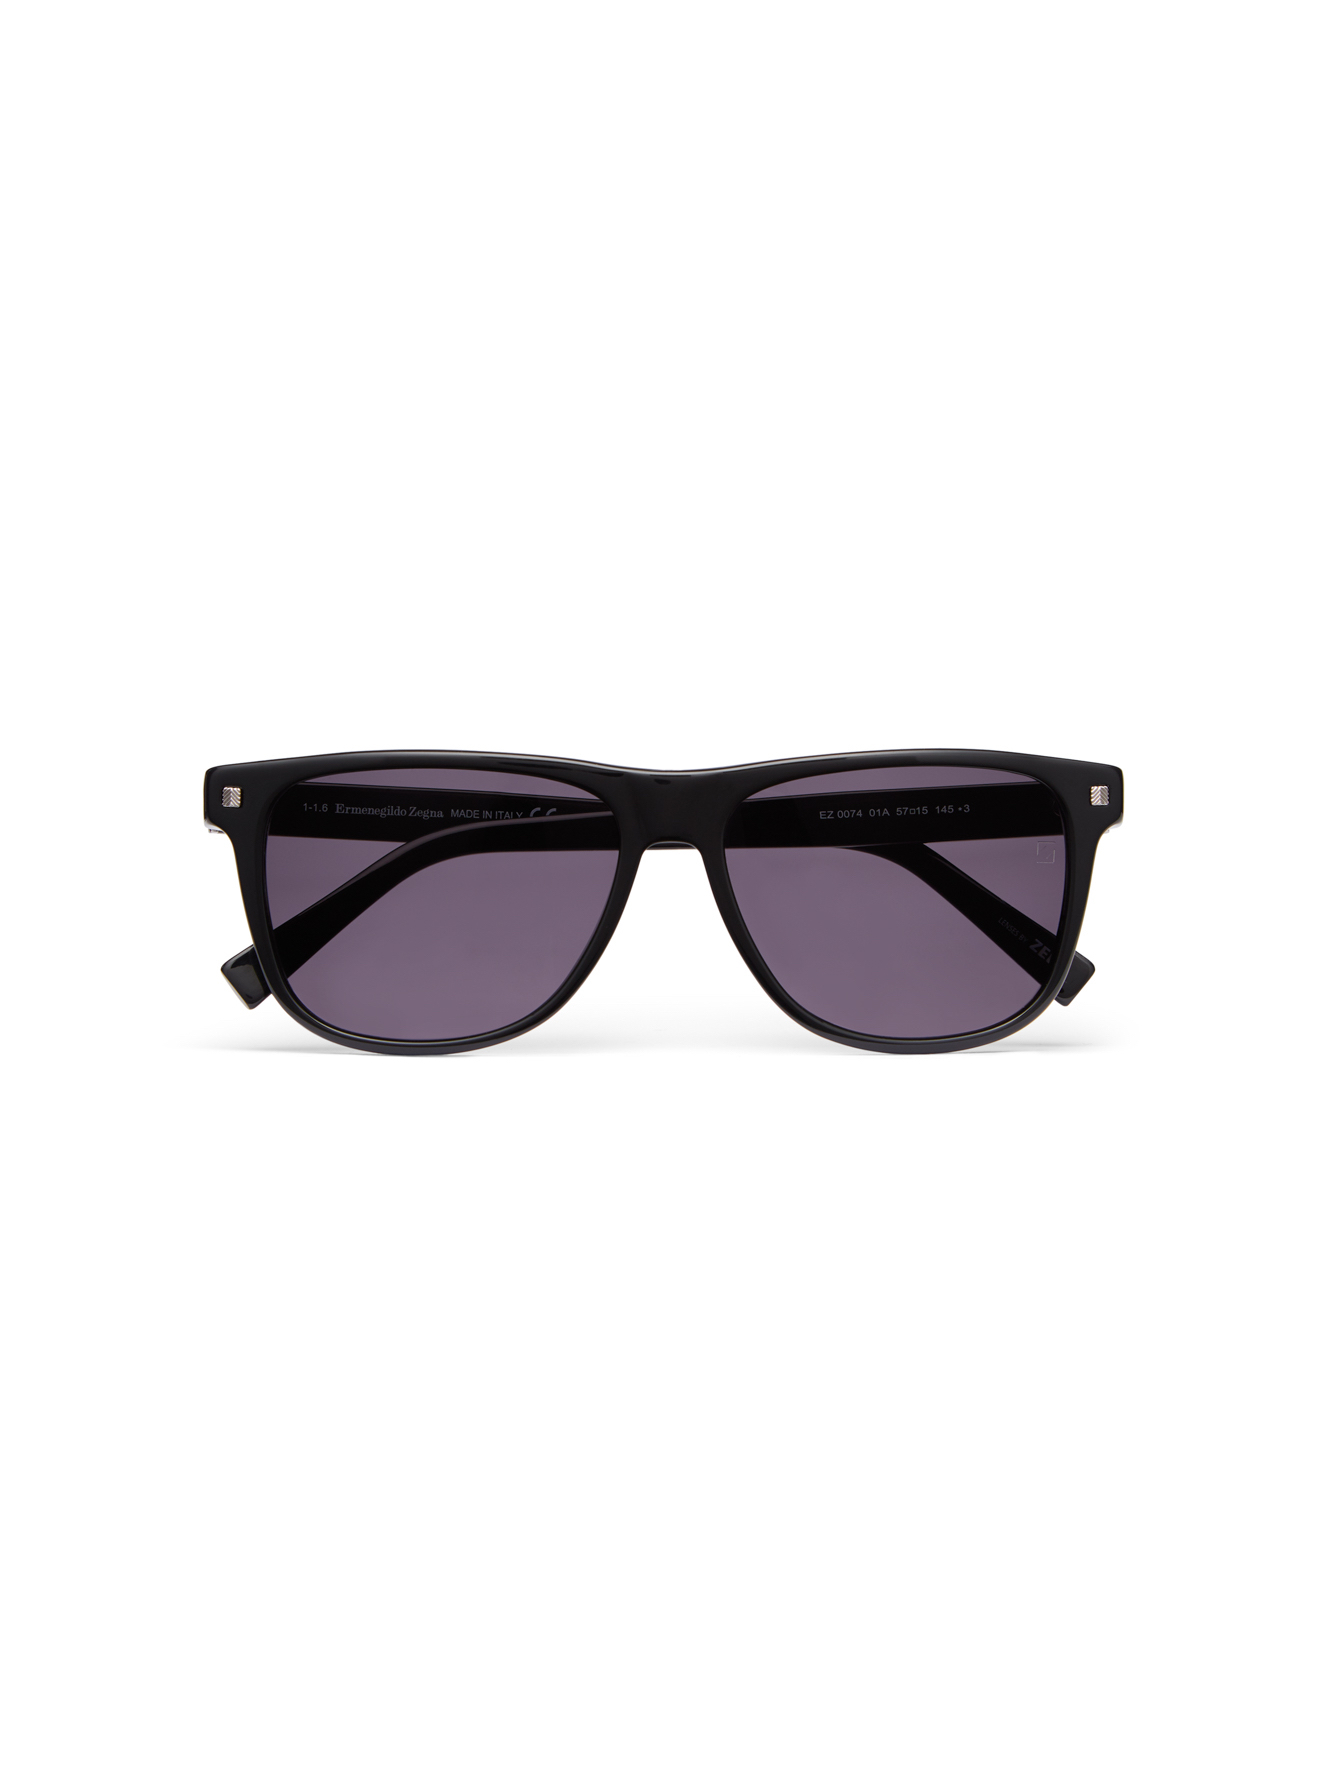 Black Square Wayfarer Sunglasses £165